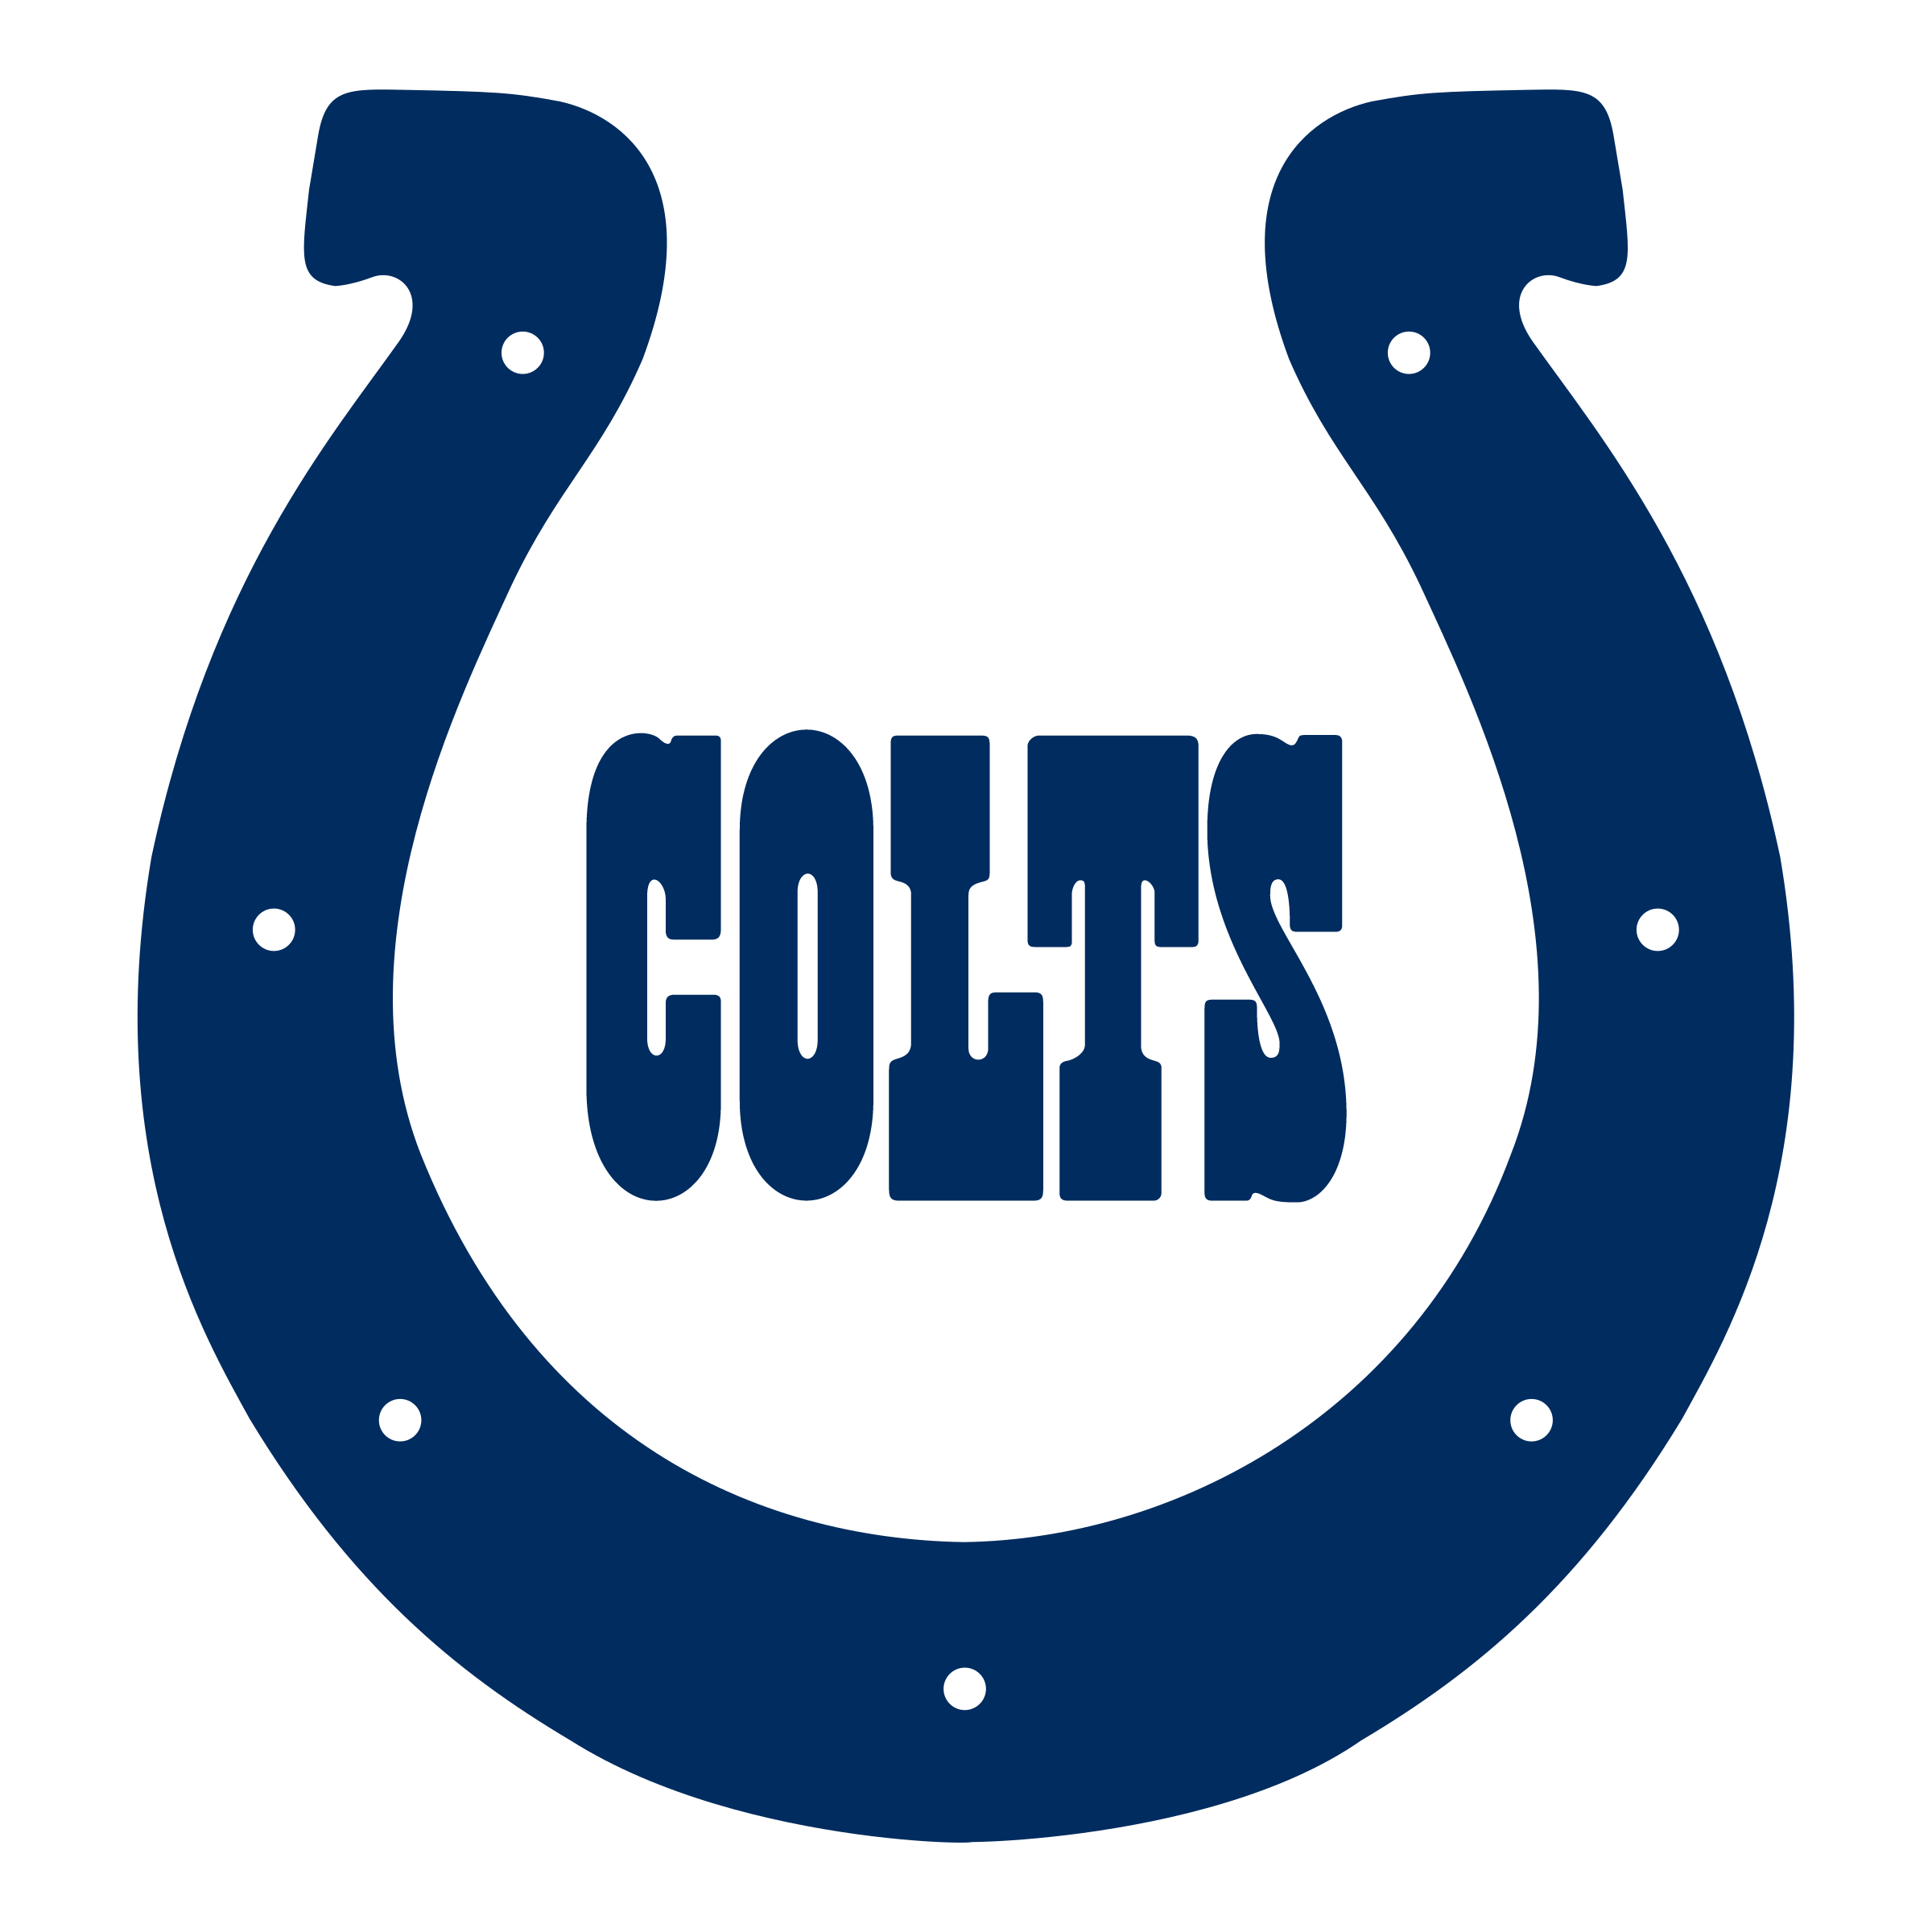 Indianapolis Colts logo black